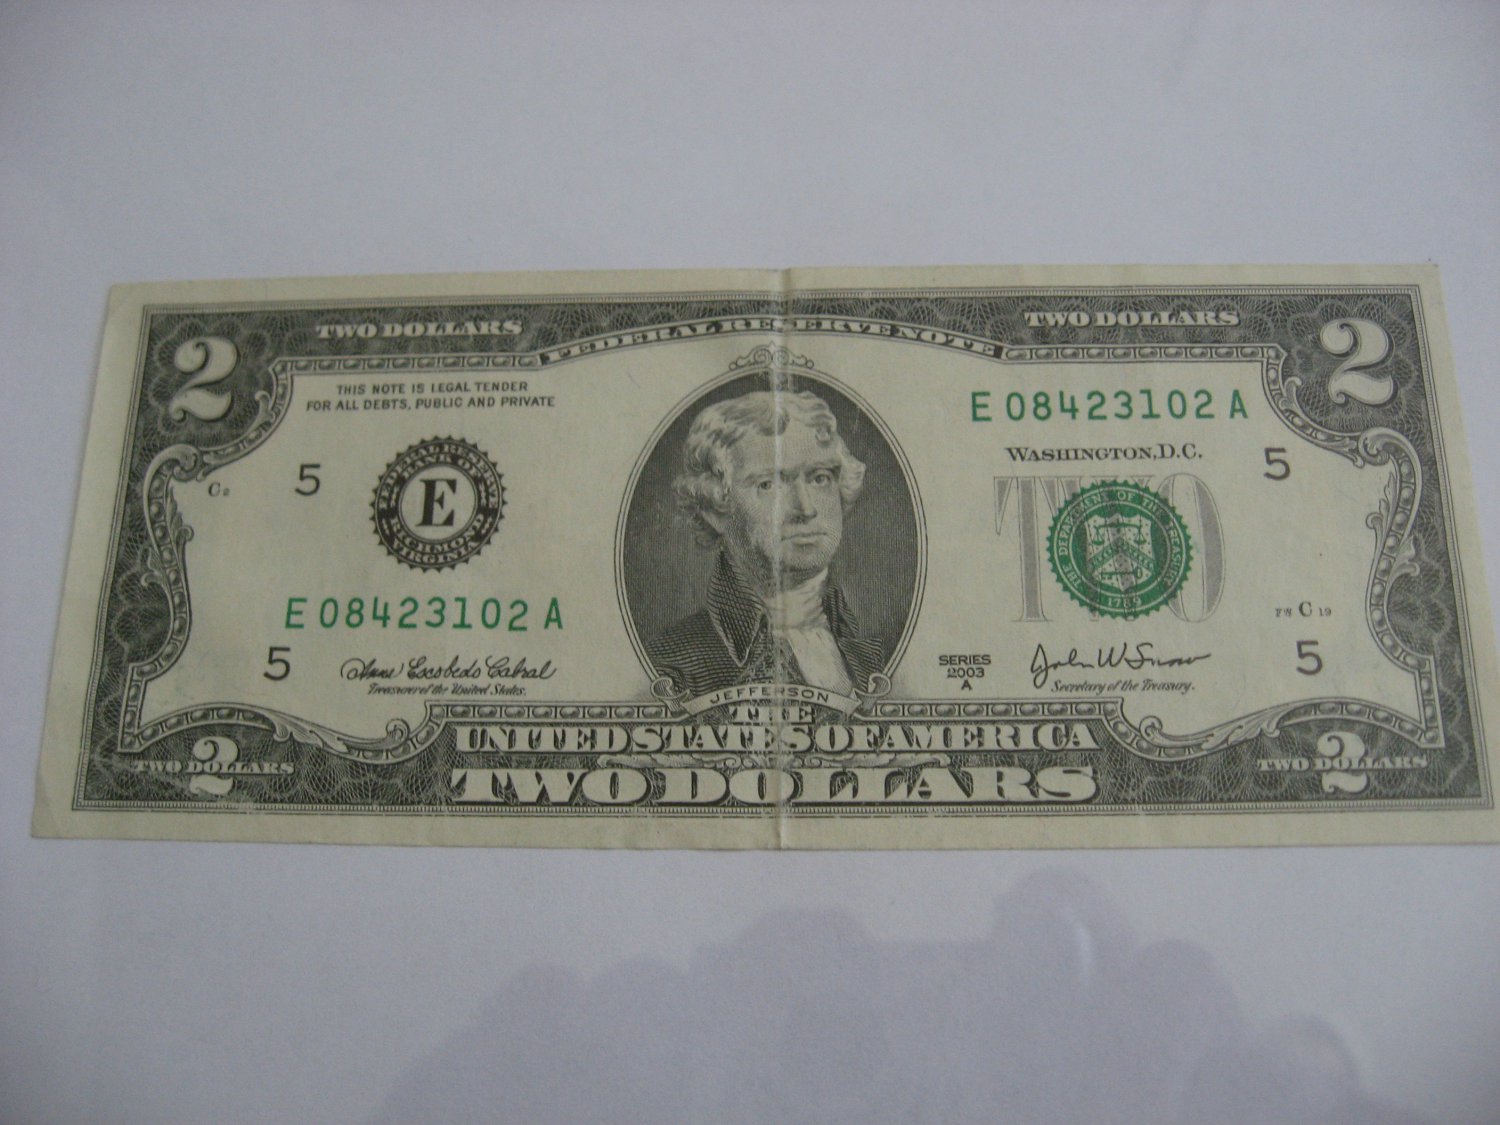 2003-A - $2 Dollar Bill